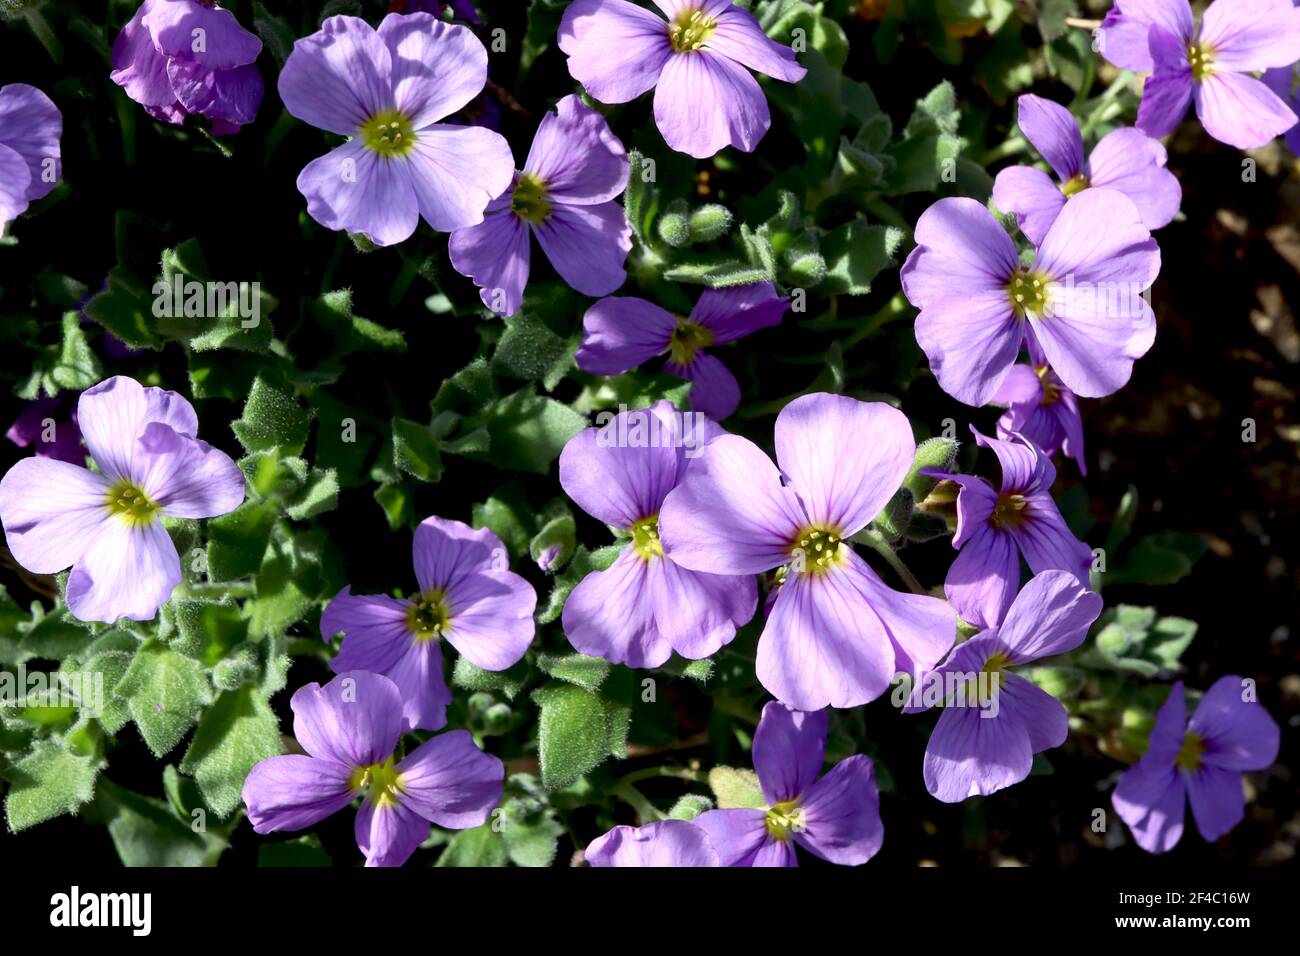 Aubrieta deltoidea ‘Royal Violet’ Rock Cress Royal Violet – tiefrosa Blüten und ovale spinöse Blätter, März, England, Großbritannien Stockfoto